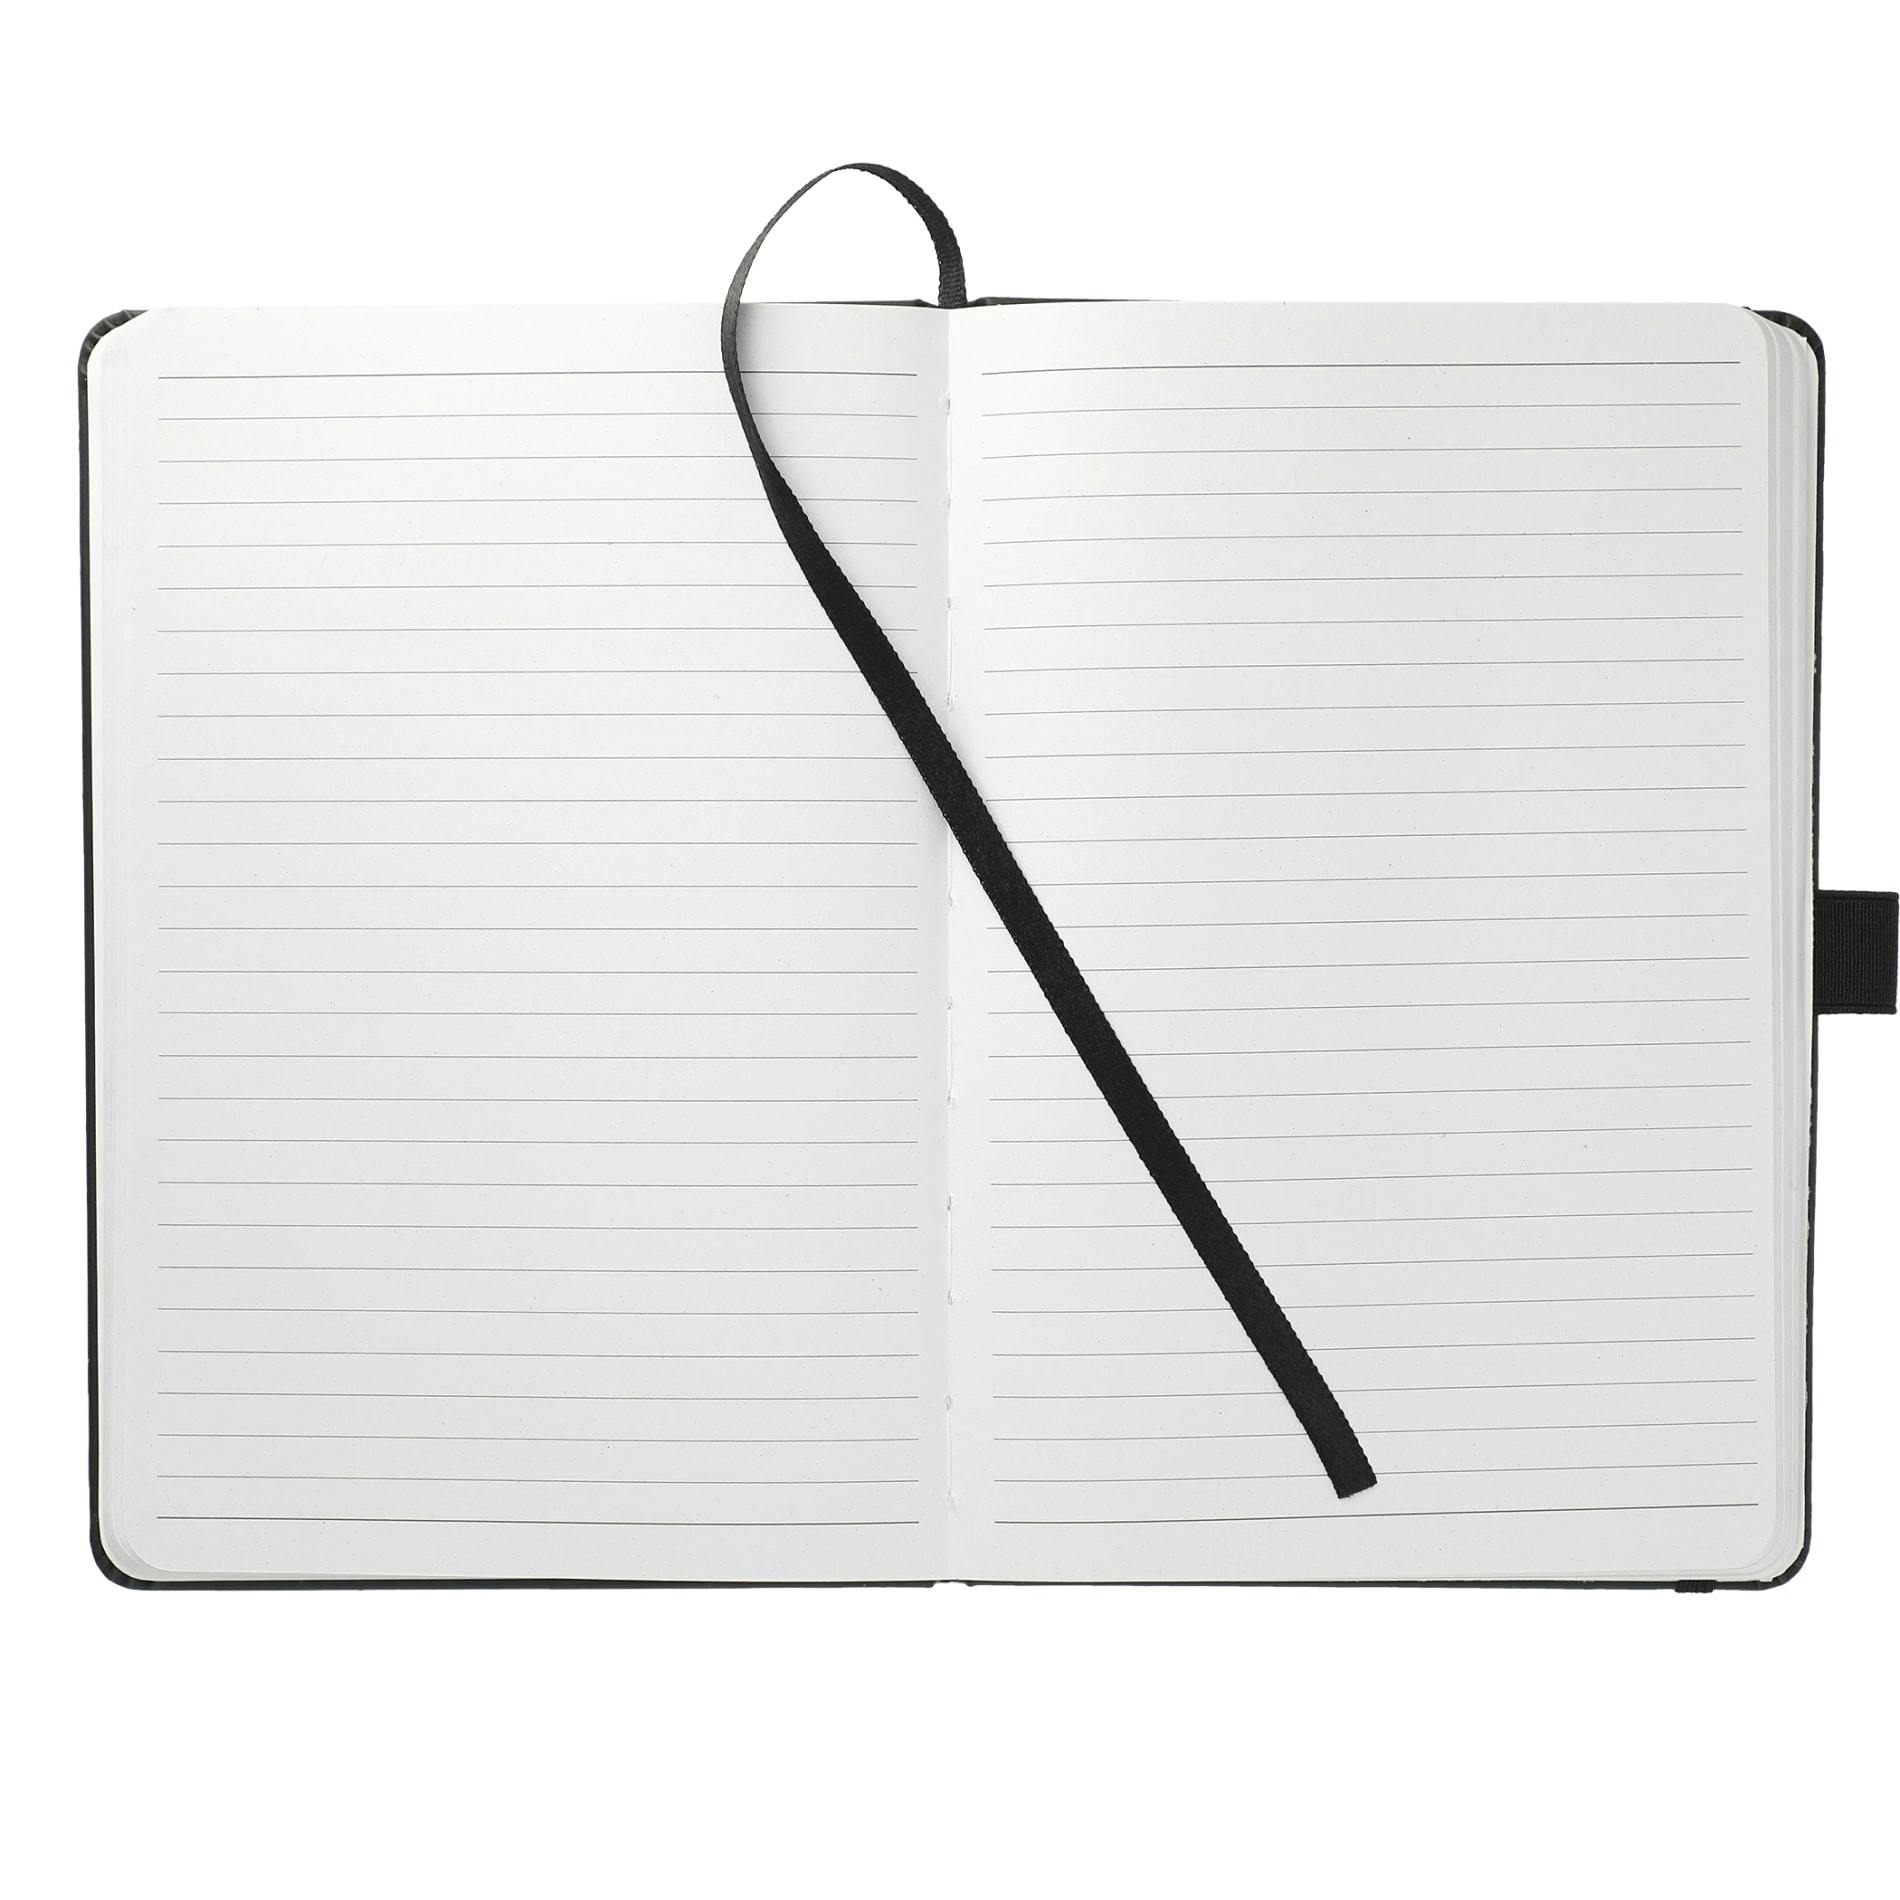 5.5” x 8.5” Mela Bound JournalBook ® - additional Image 3